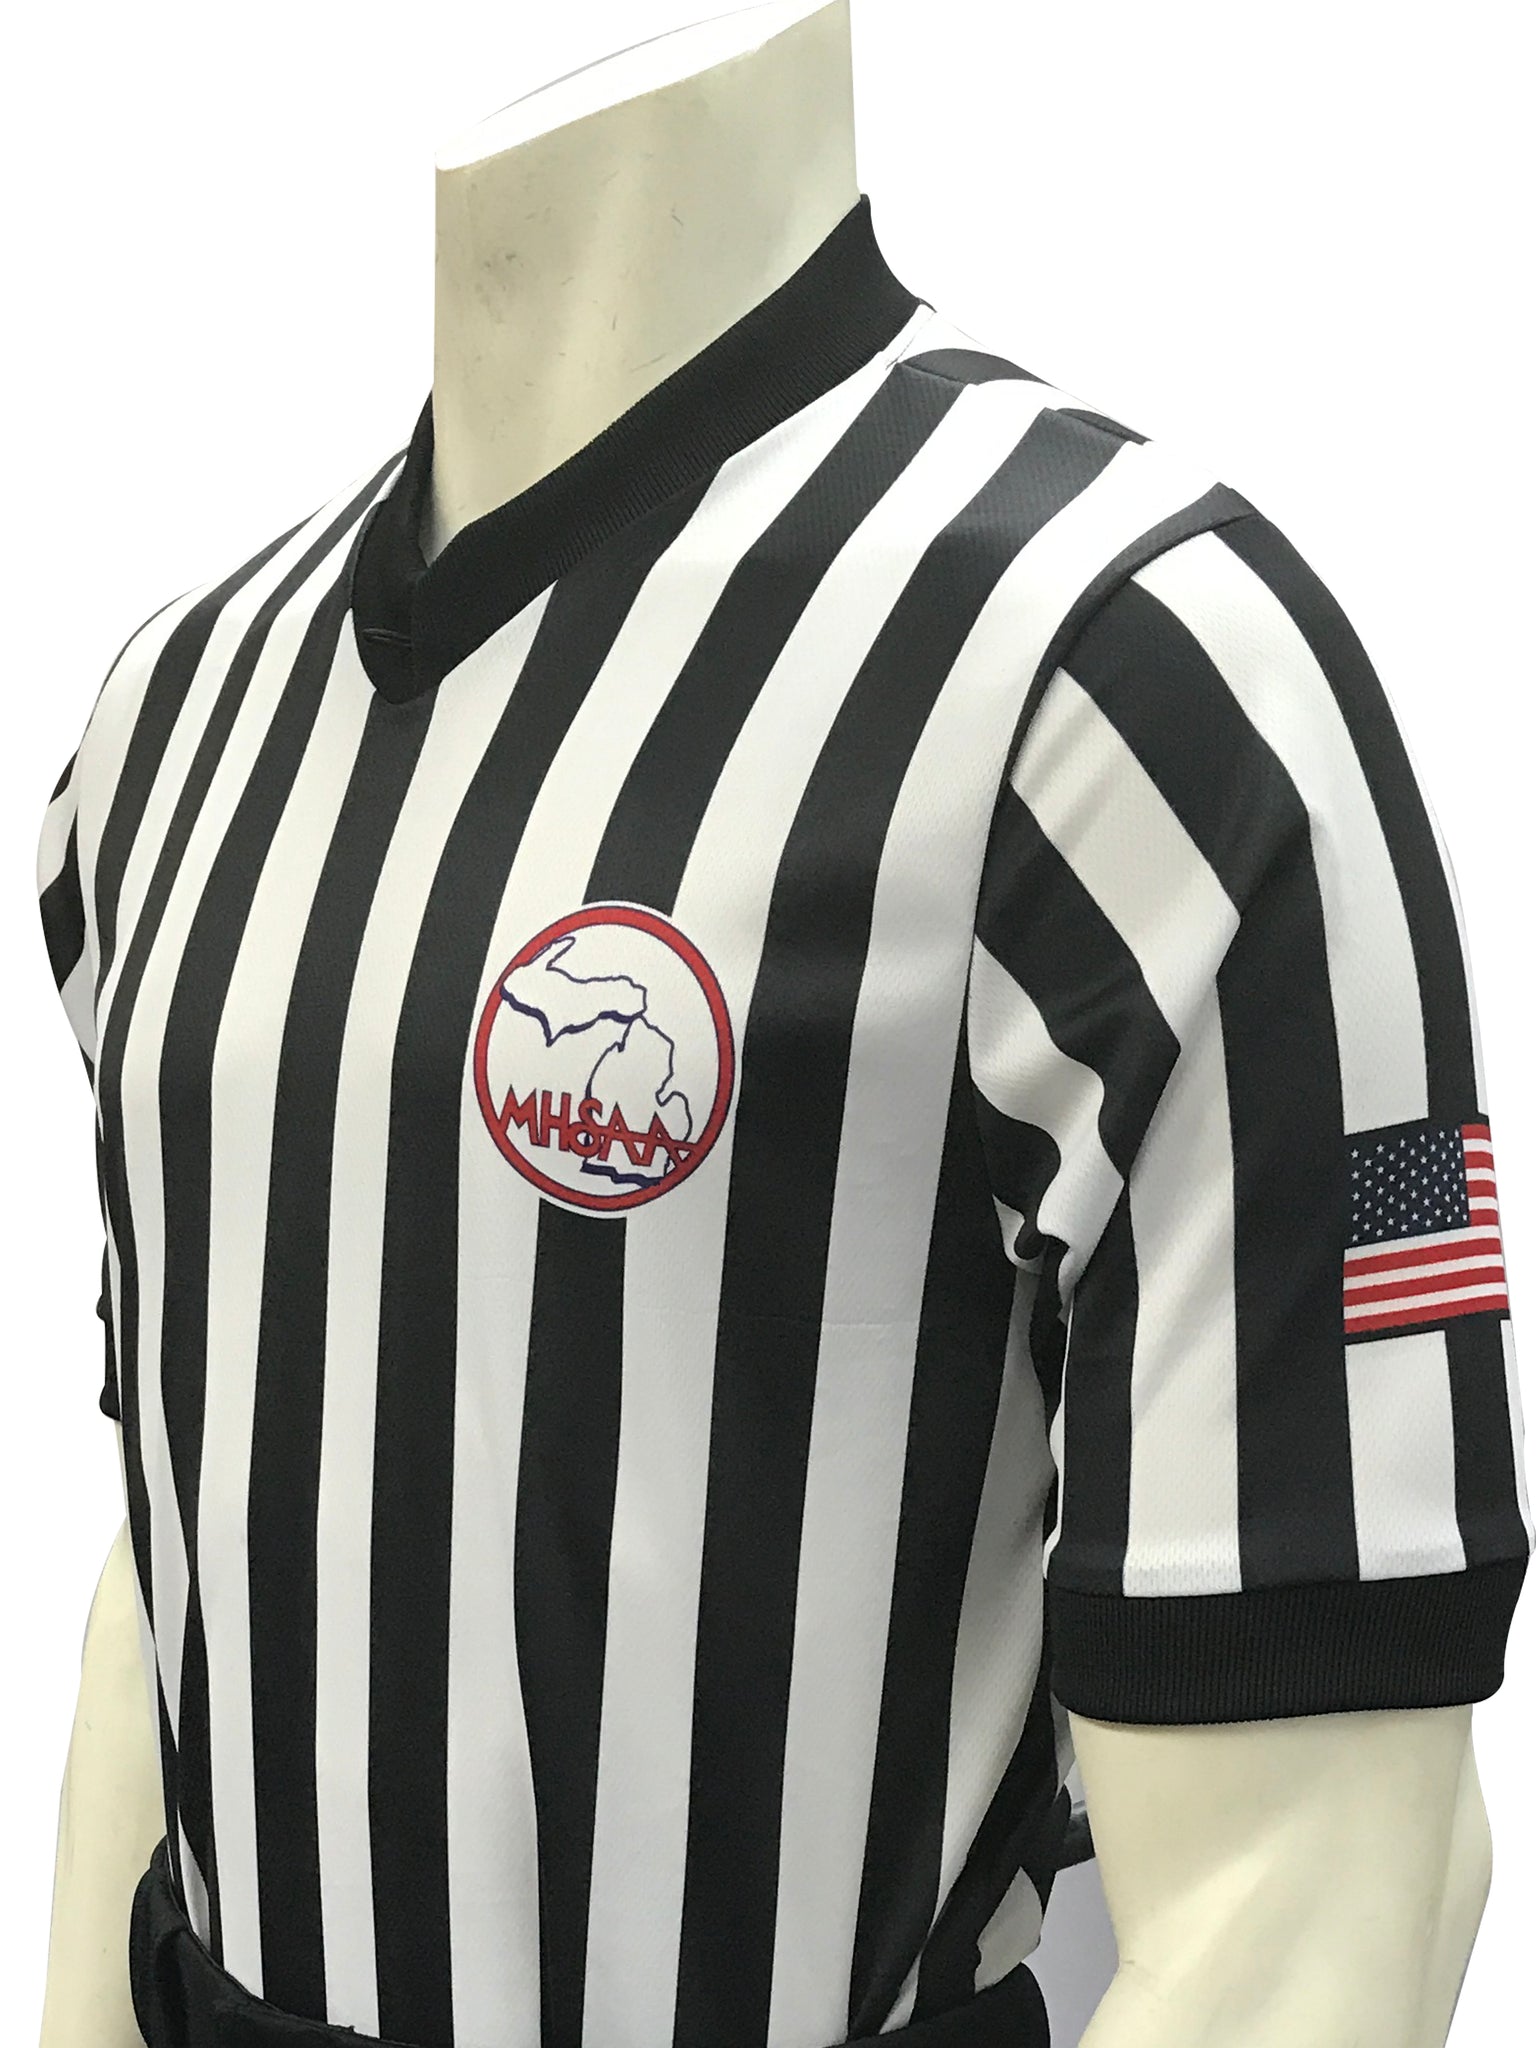 USA200MI - Smitty "Made in USA" - Basketball Men's Short Sleeve Shirt